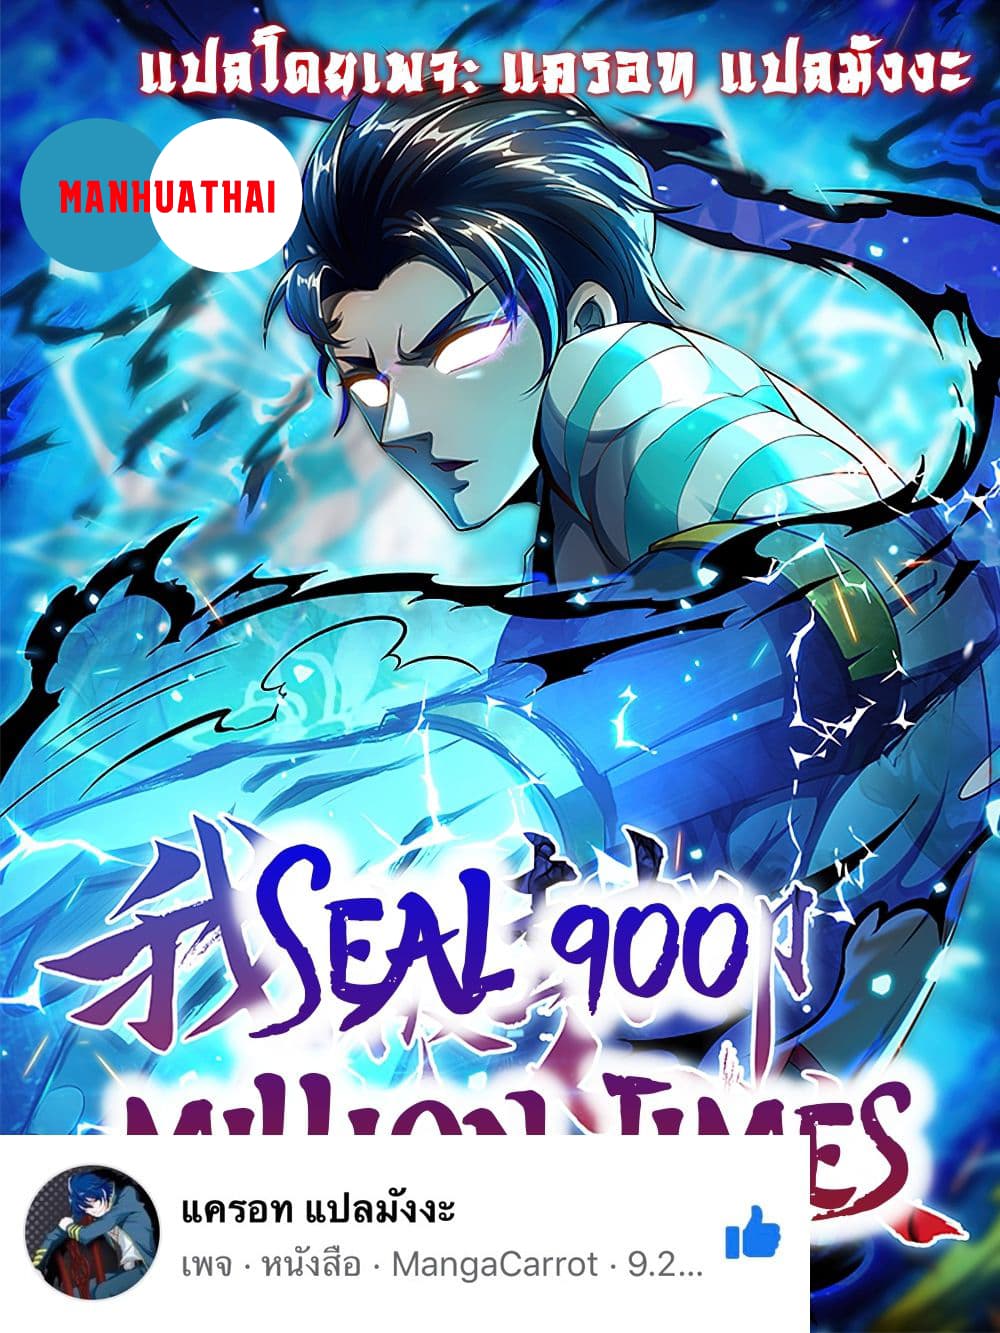 Seal 900 Million Times 17-17